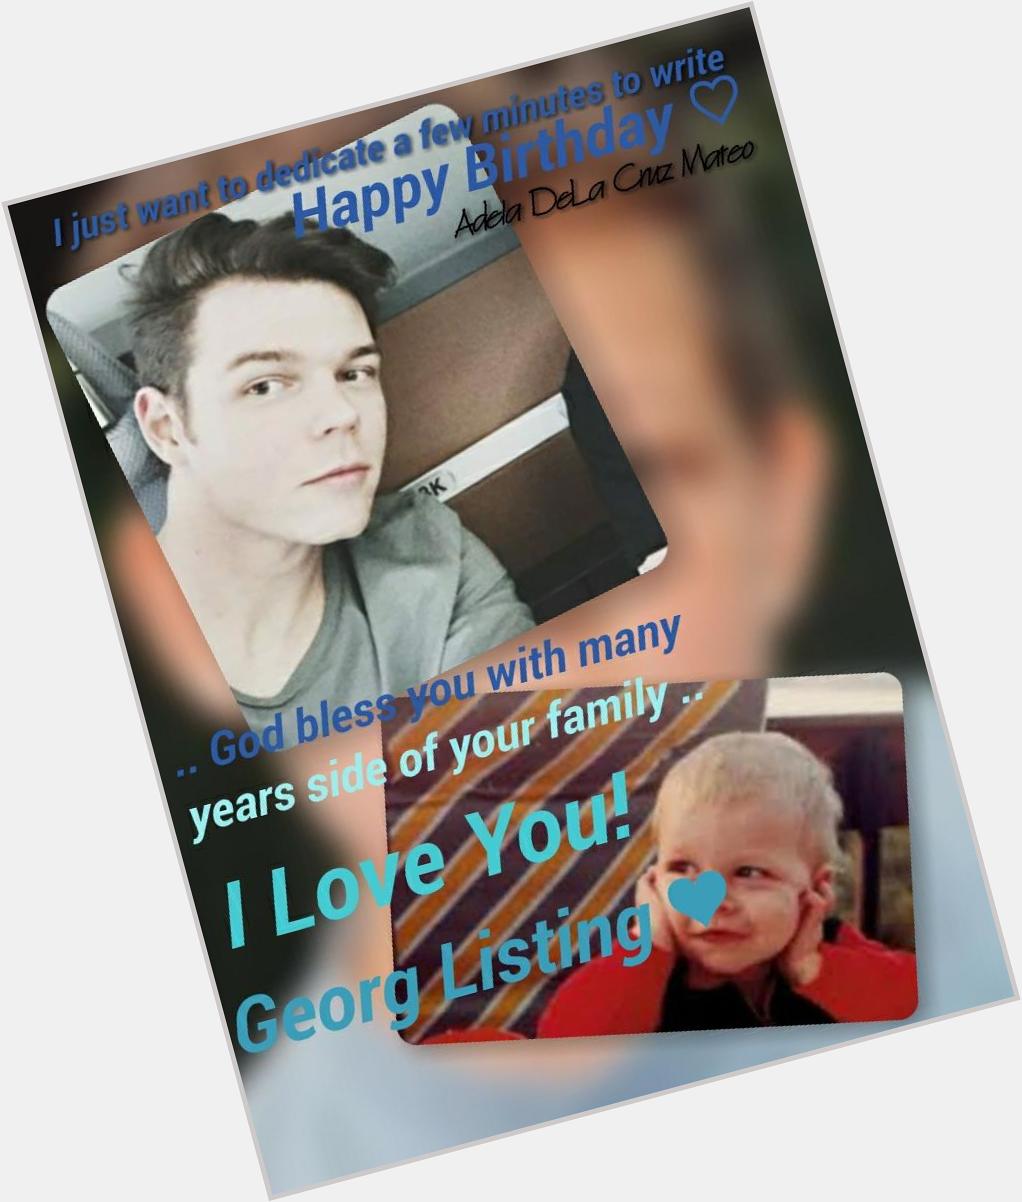 HAPPY BIRTHDAY GEORG LISTING... I Love You Georg.... 